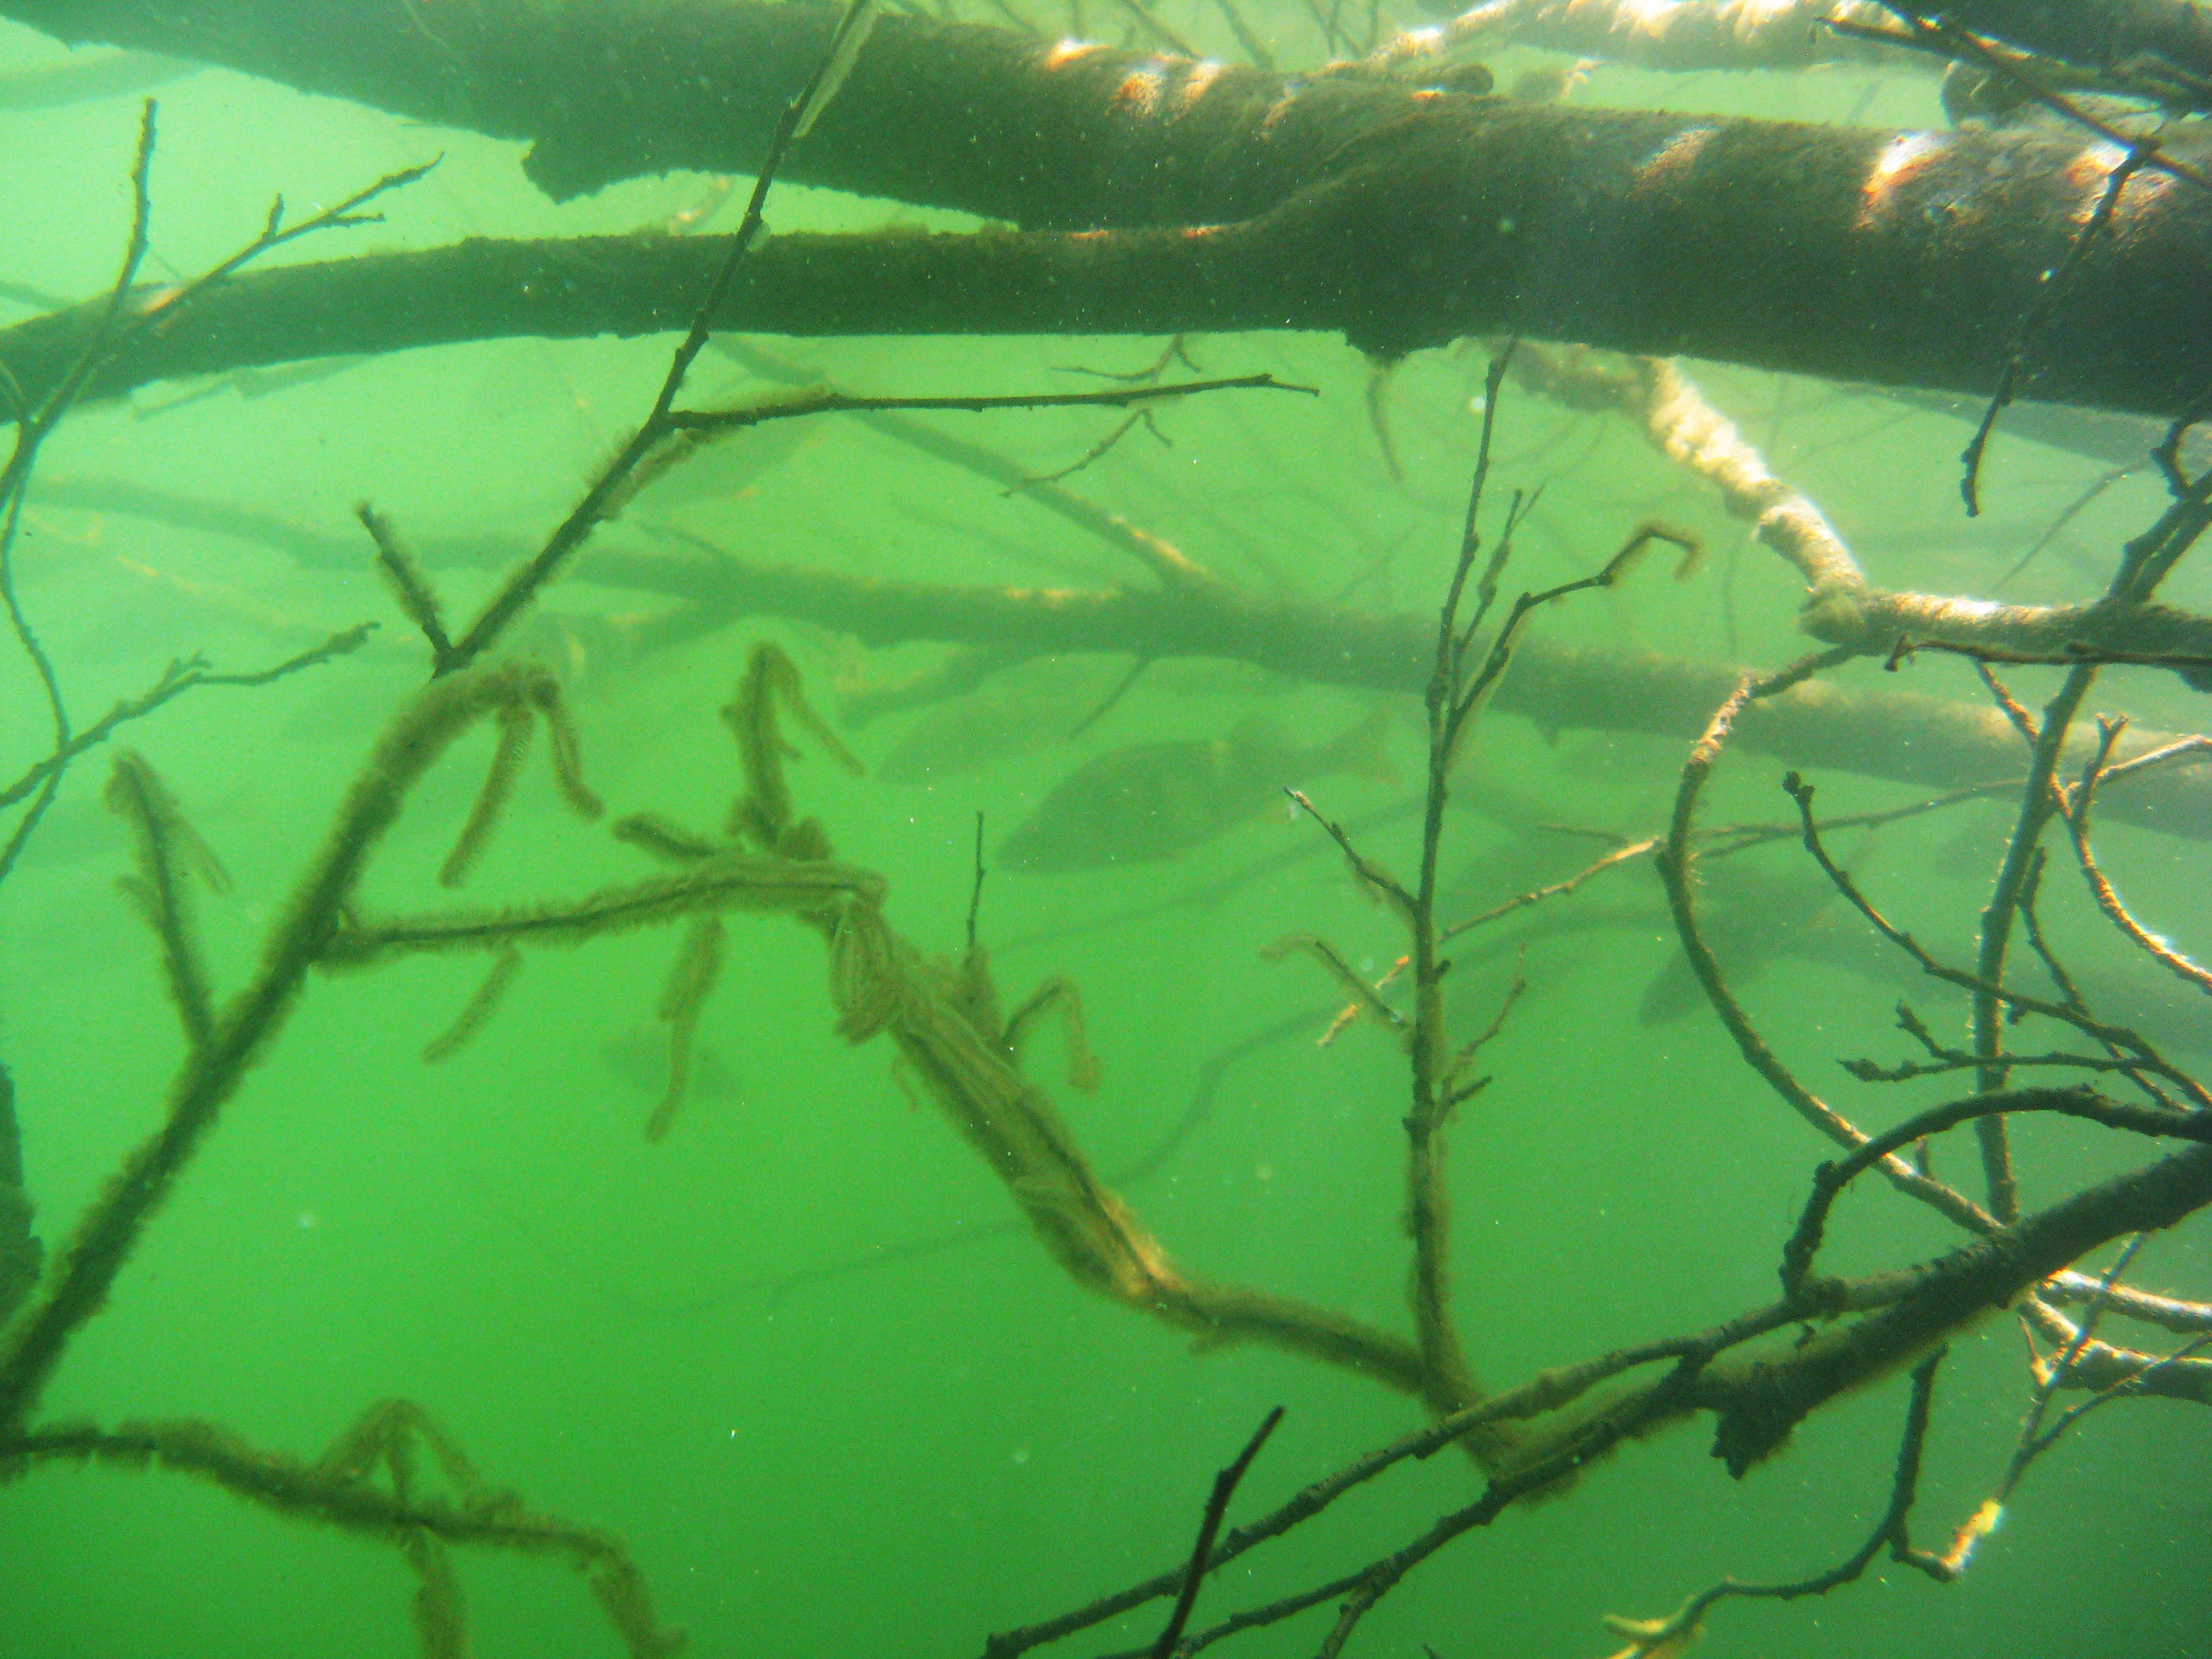 Underwater tree stems and perch. Vedenalaisia puun oksia ja ahvenia.